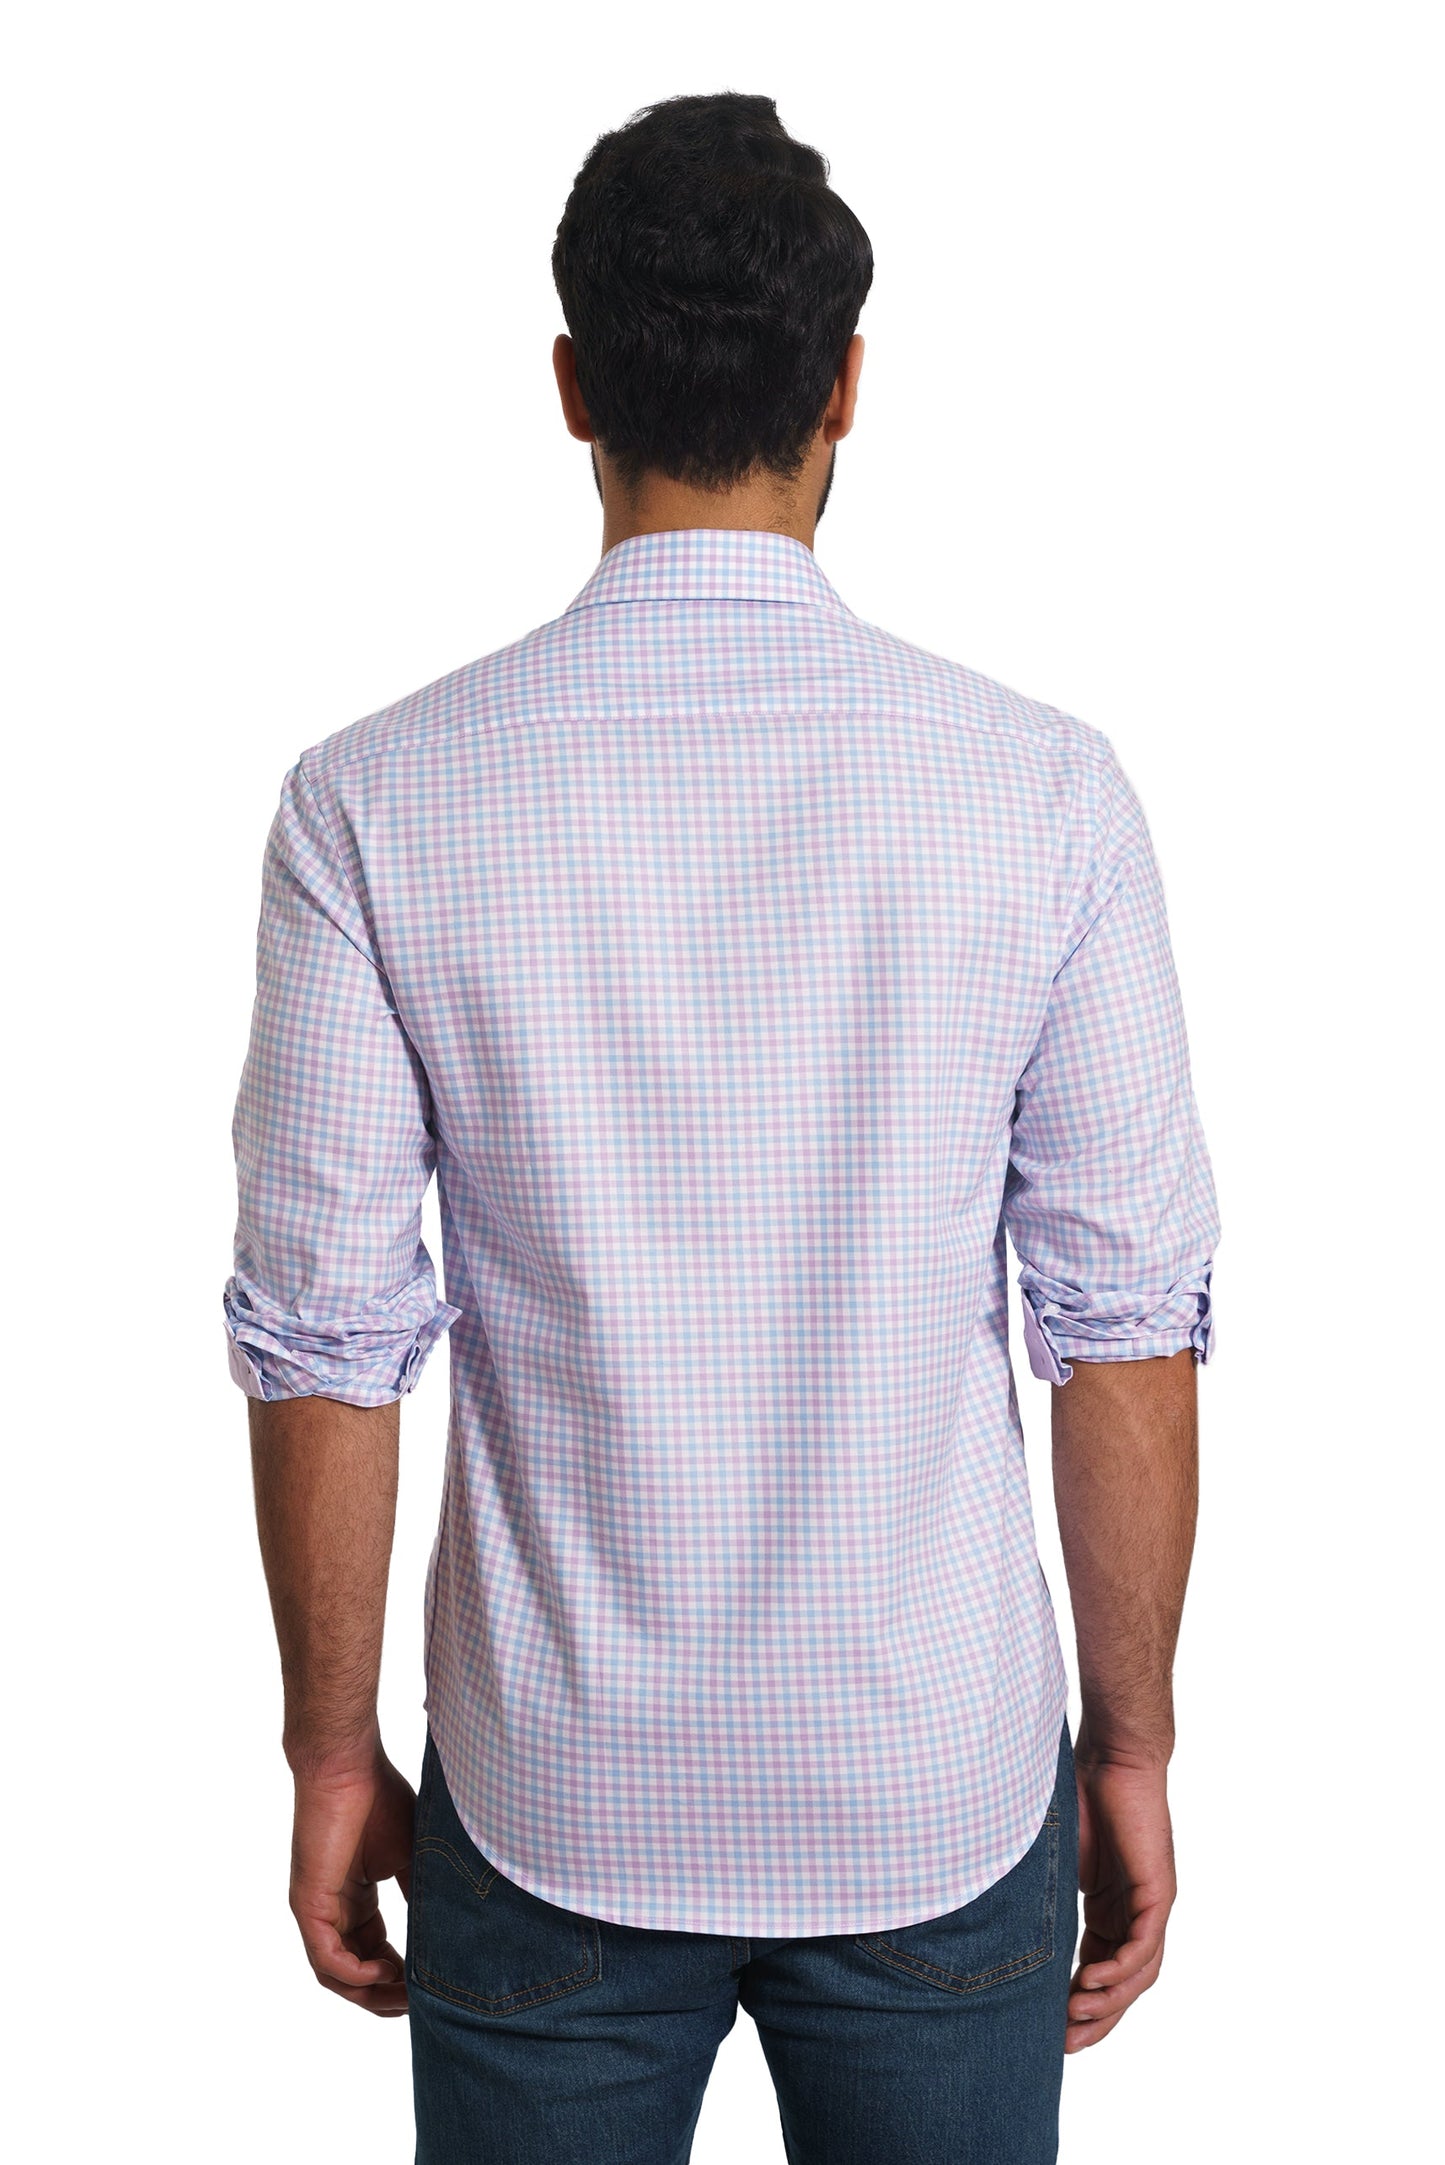 White Lilac Long Sleeve Shirt TP-7138 Back